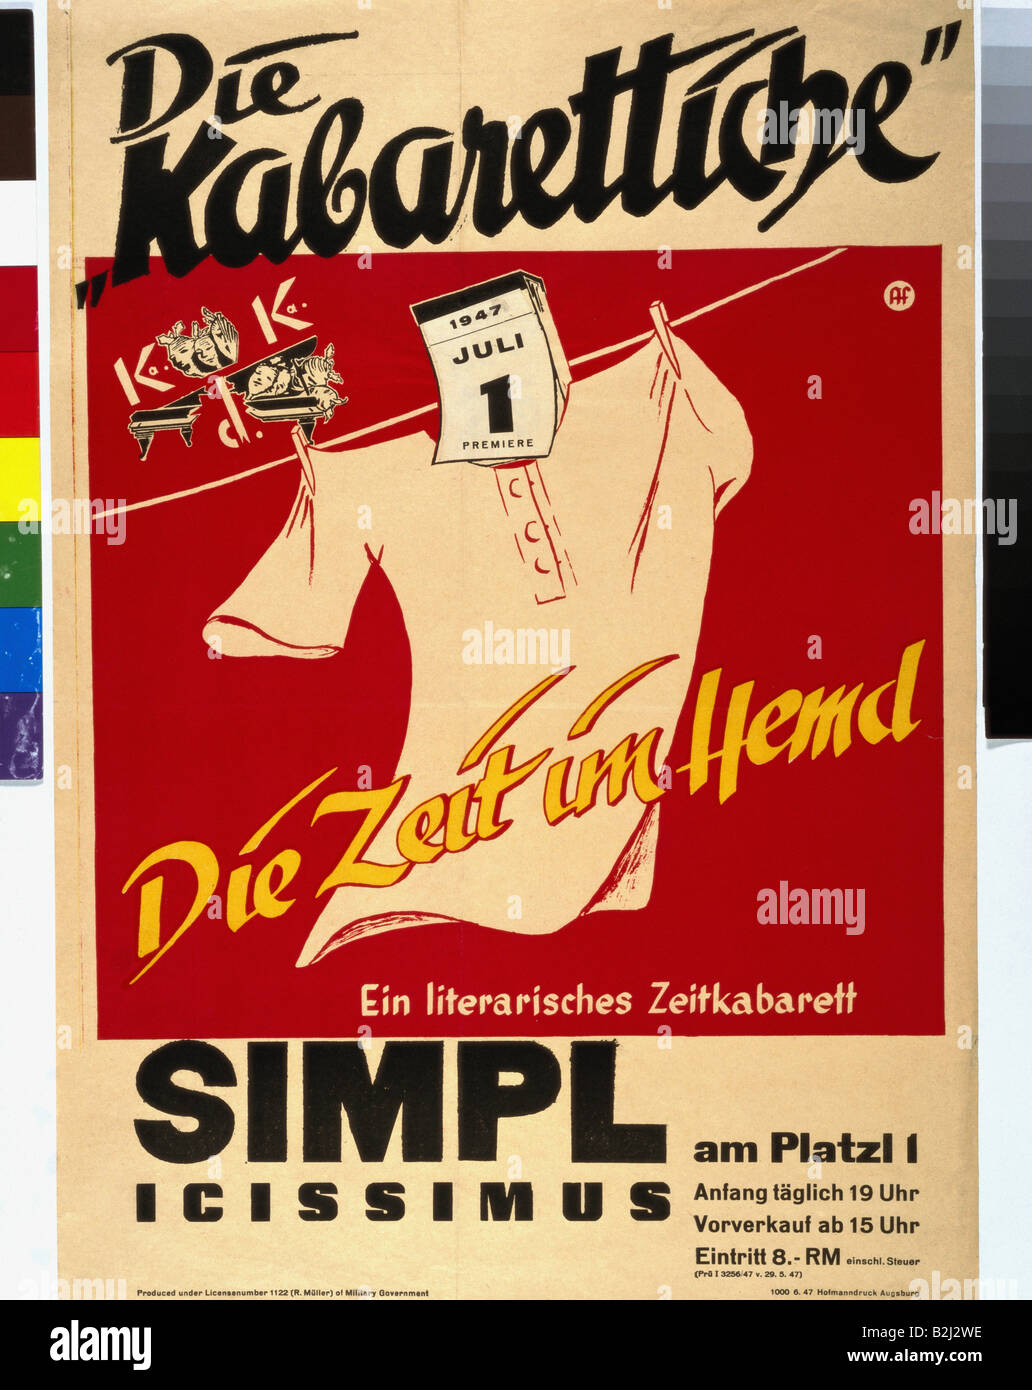 advertising, theatre / theater, Simplicissimus, Die Kabarettiche, Munich, 1947, poster, Stock Photo